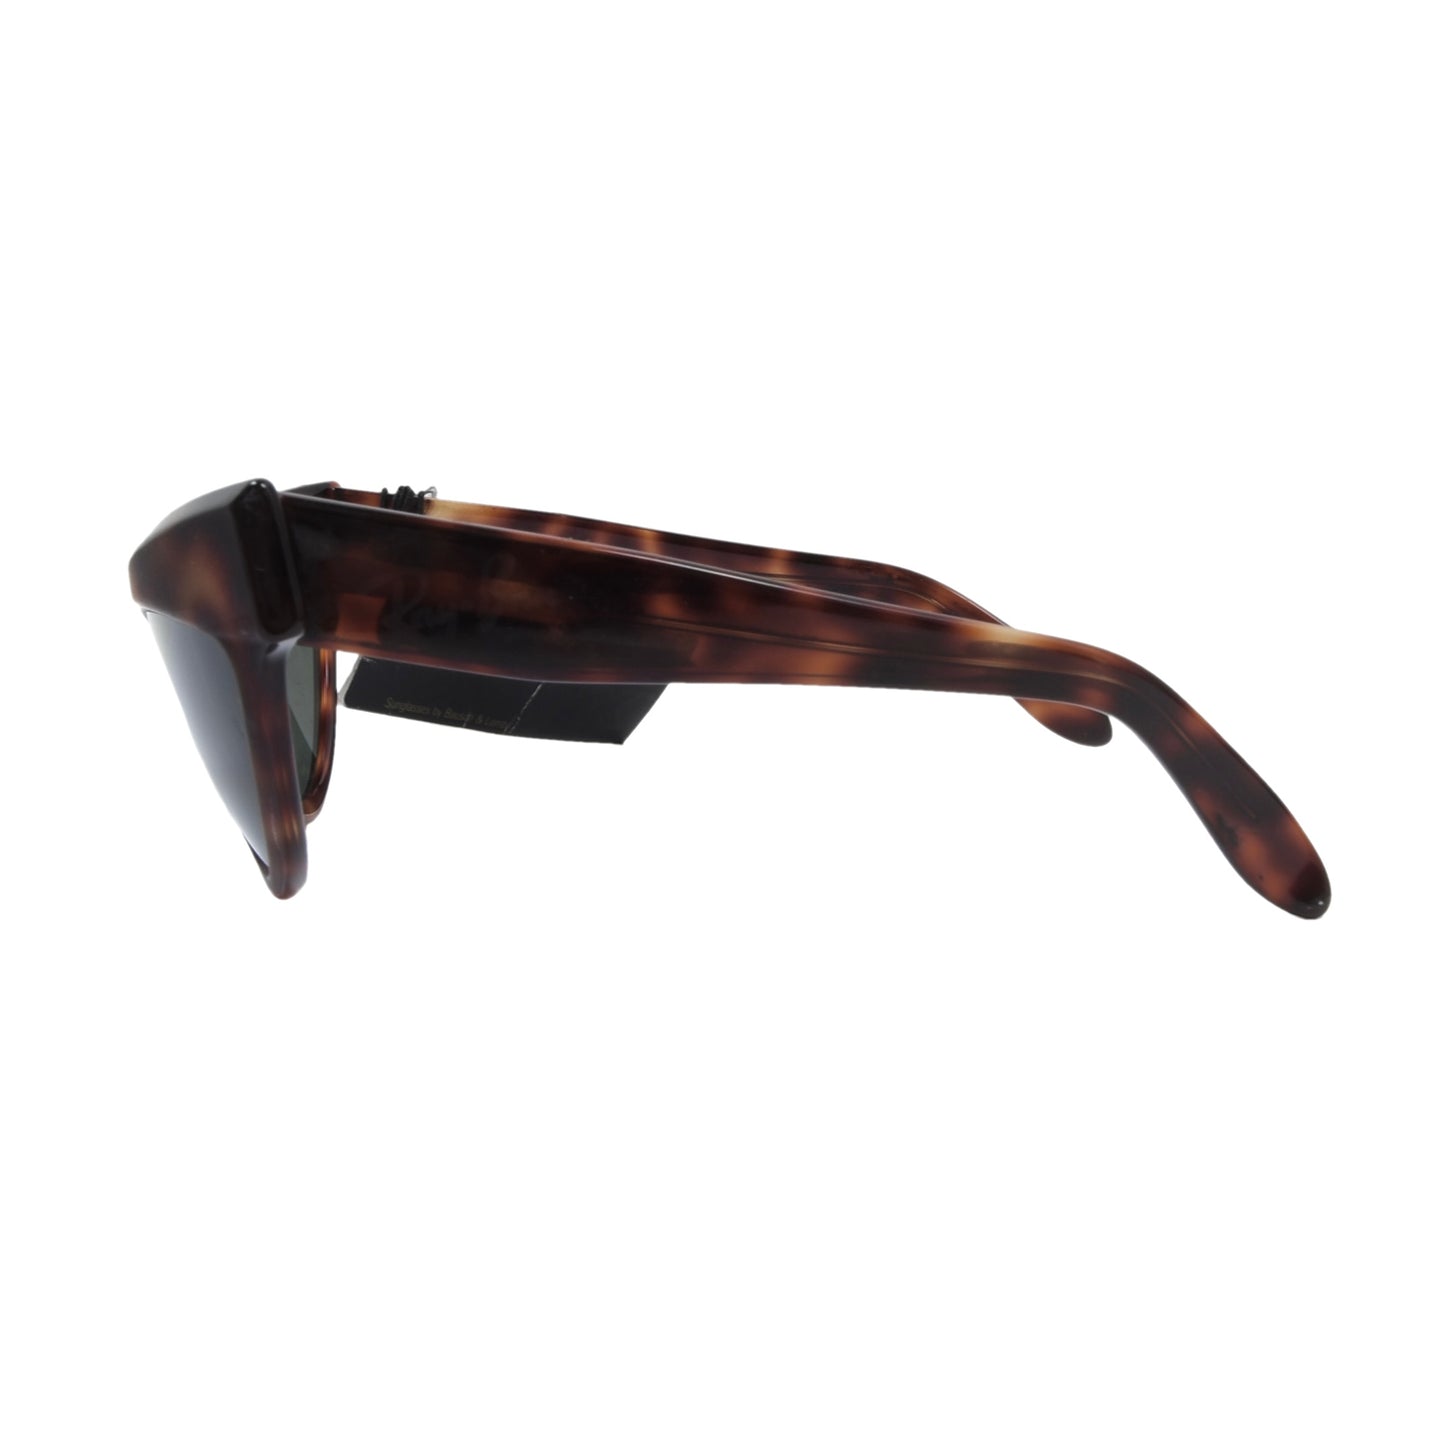 B&L Ray-Ban Onyx WO805 Sunglasses - Tortoise